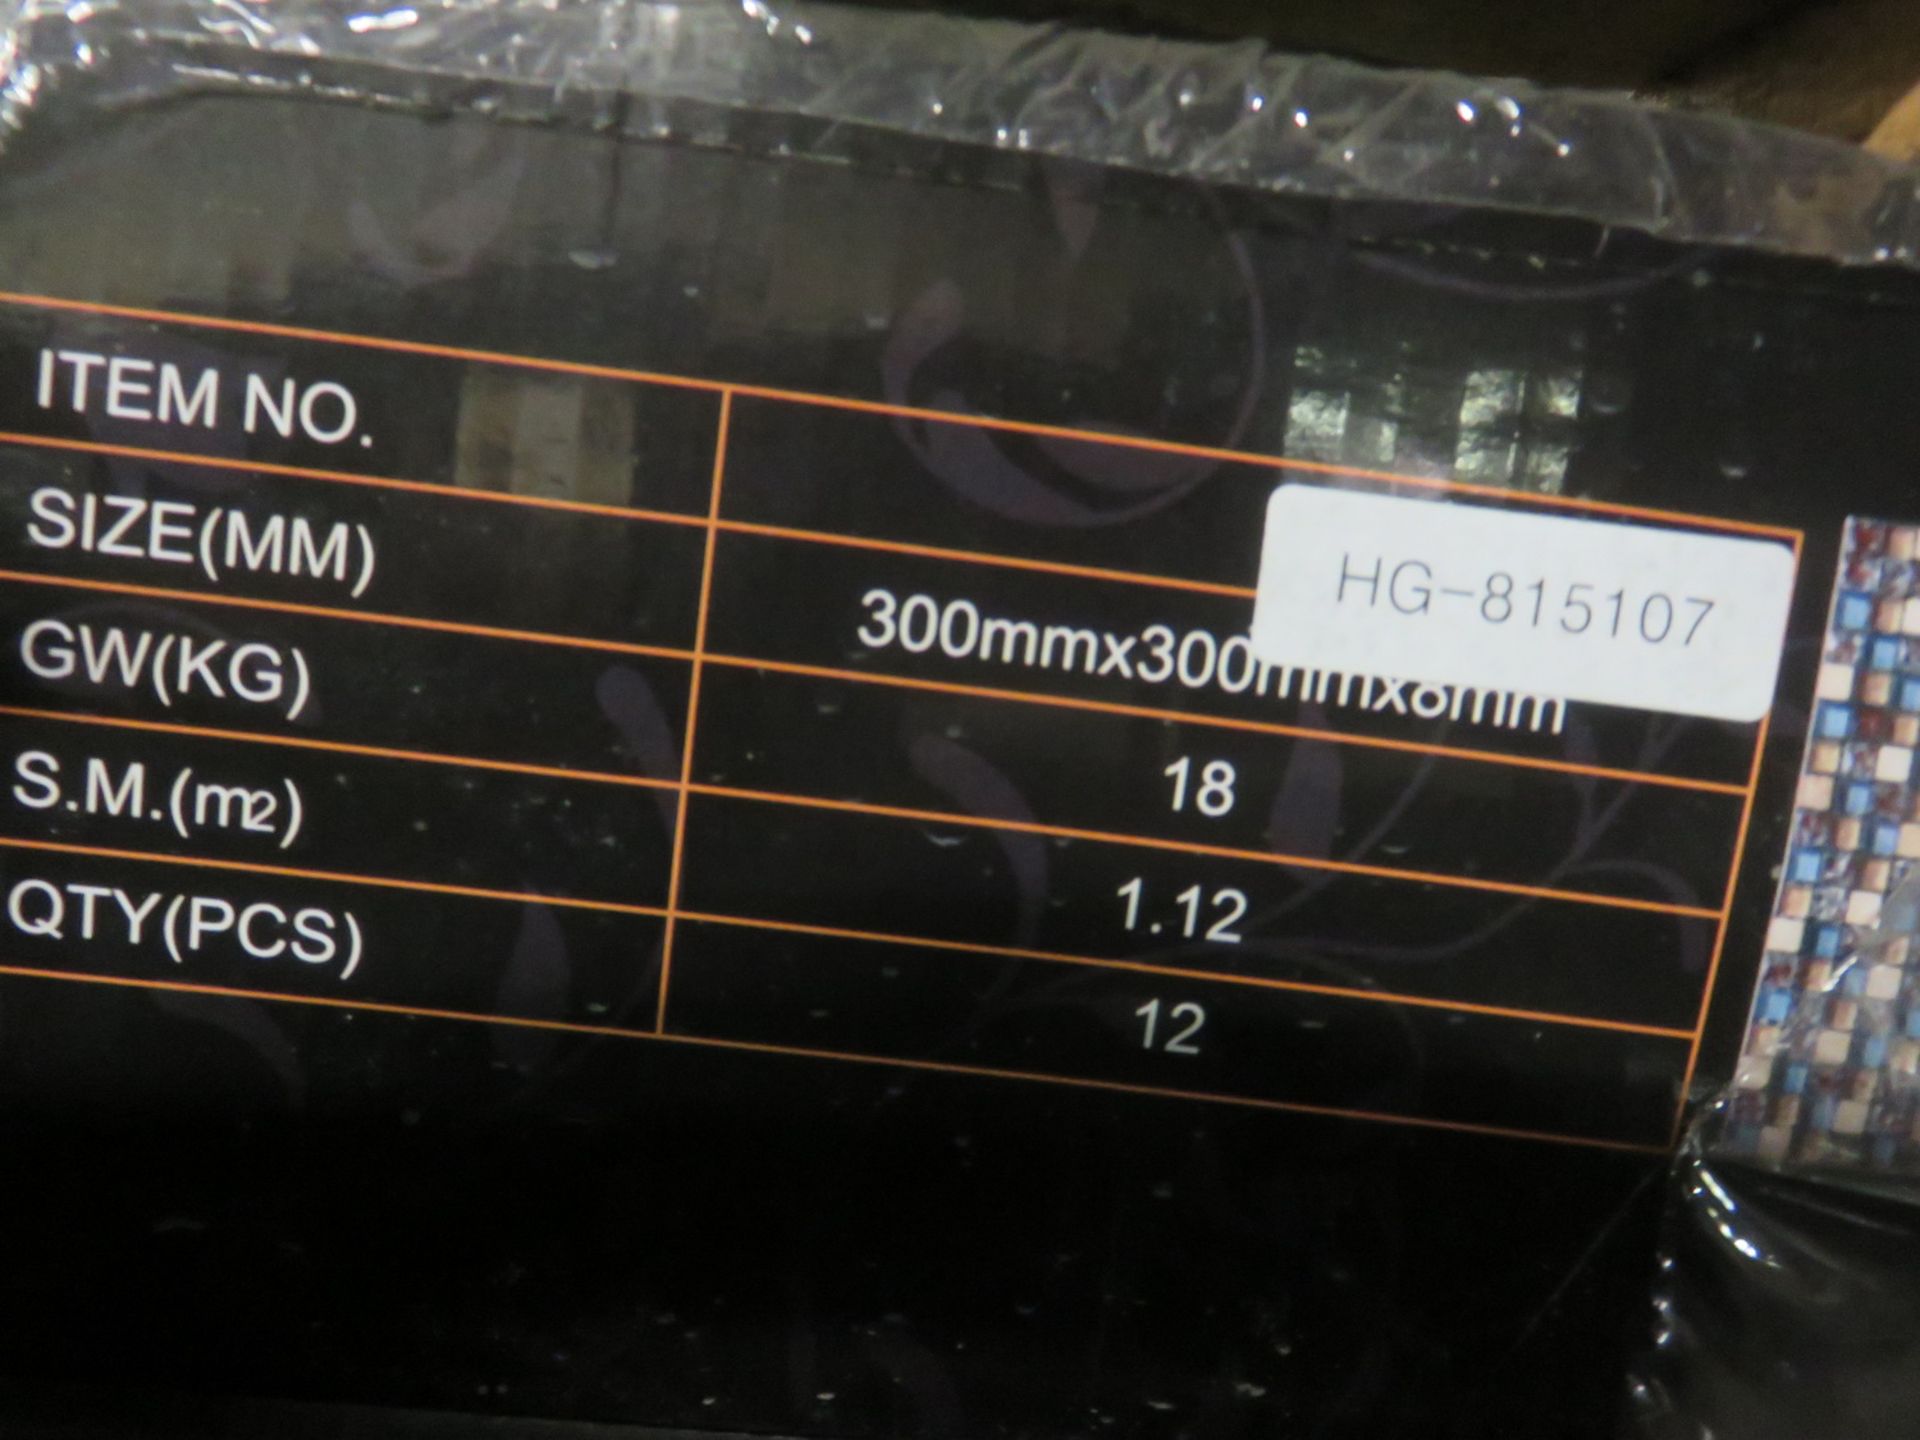 BOXES - CROWN HG815107 300 X 300 X 8MM MOSAIC TILES (12 PCS/BOX) - Image 2 of 3